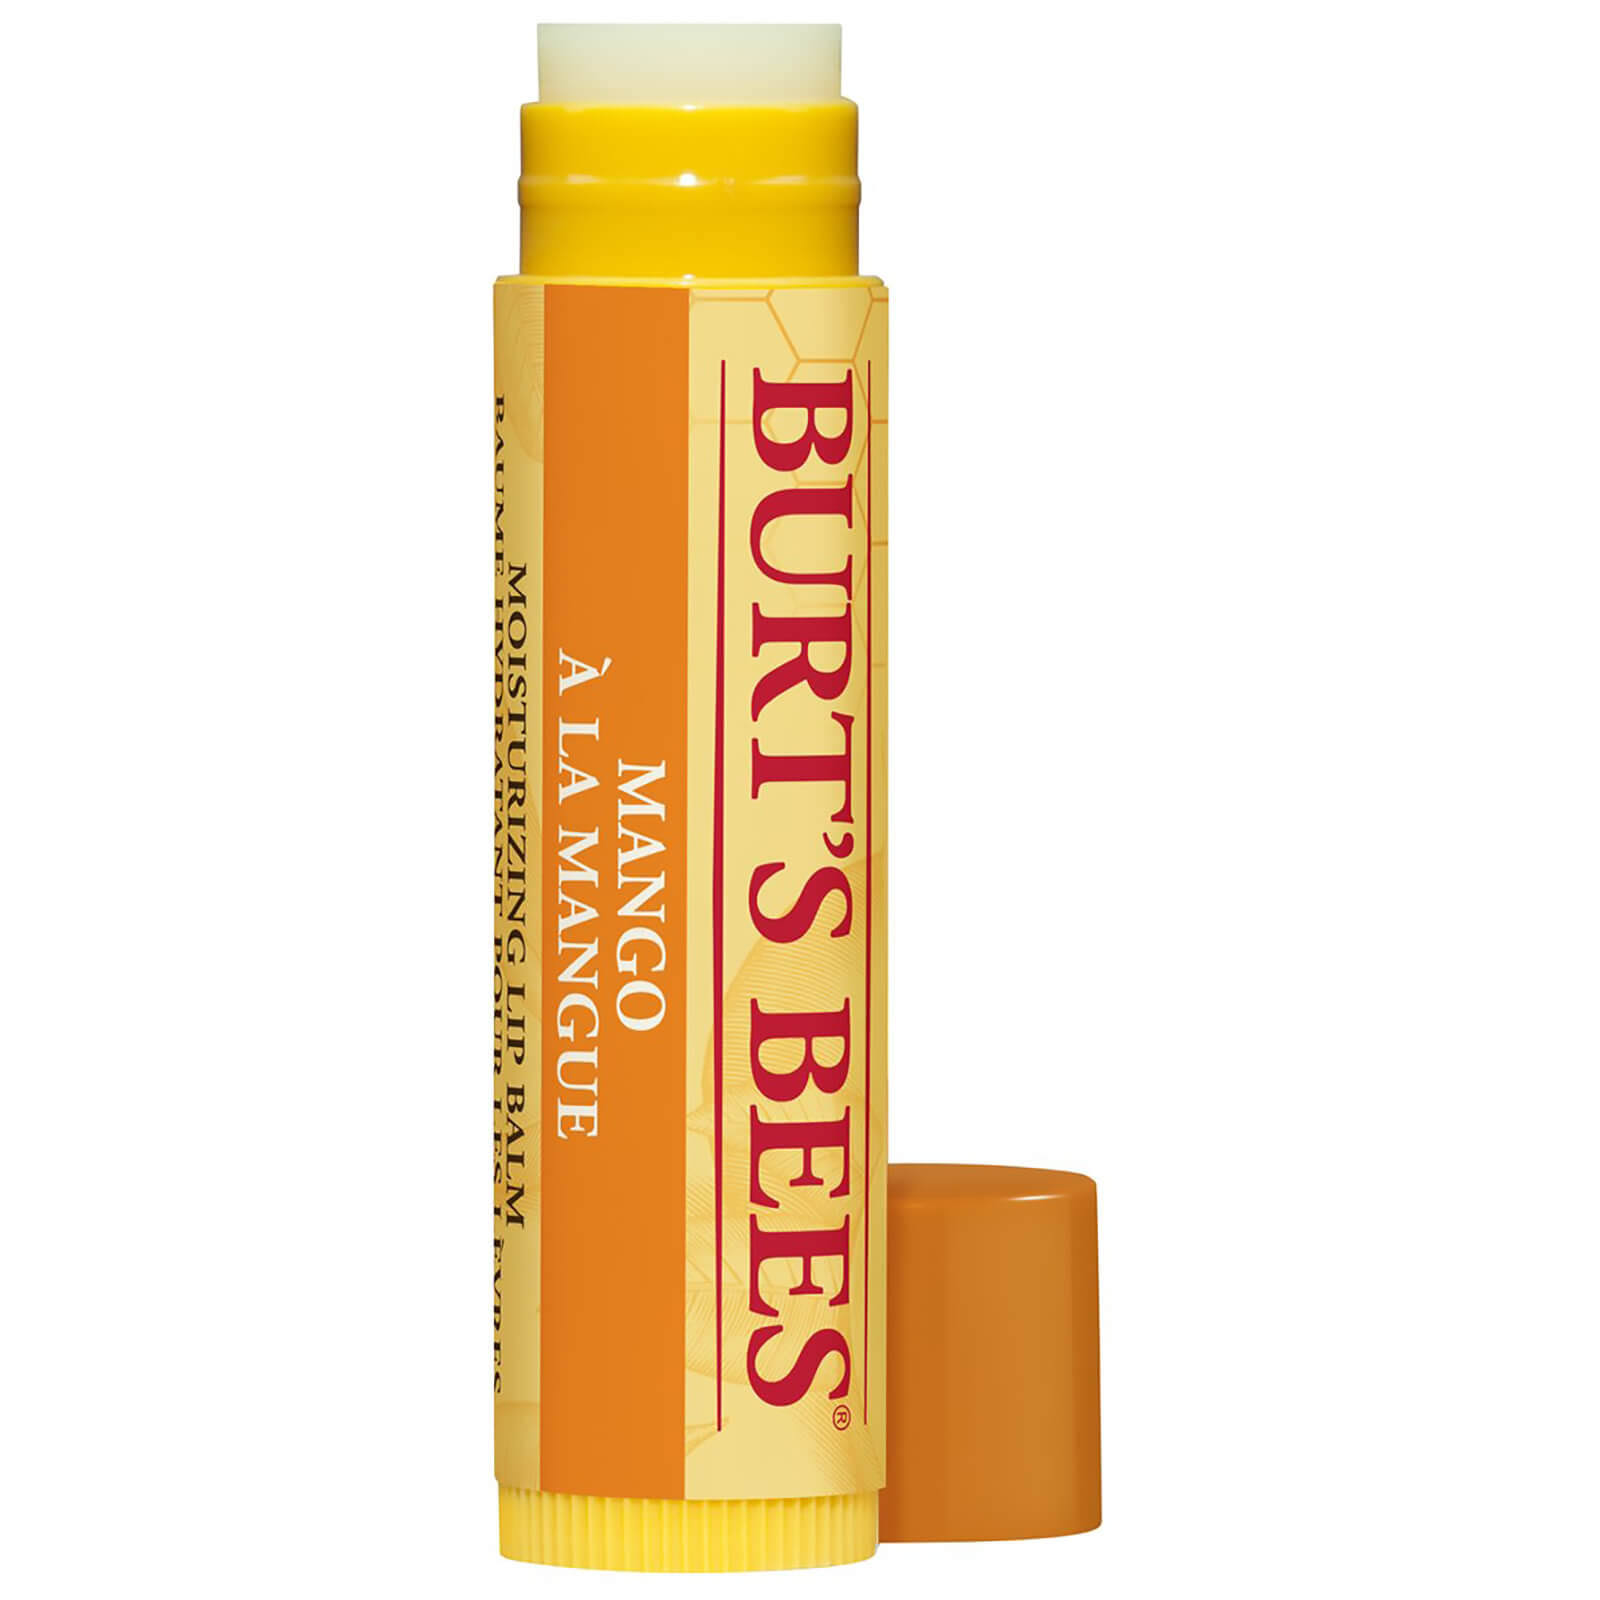 Burt's Bees Nourishing Lip Balm - Mango Butter